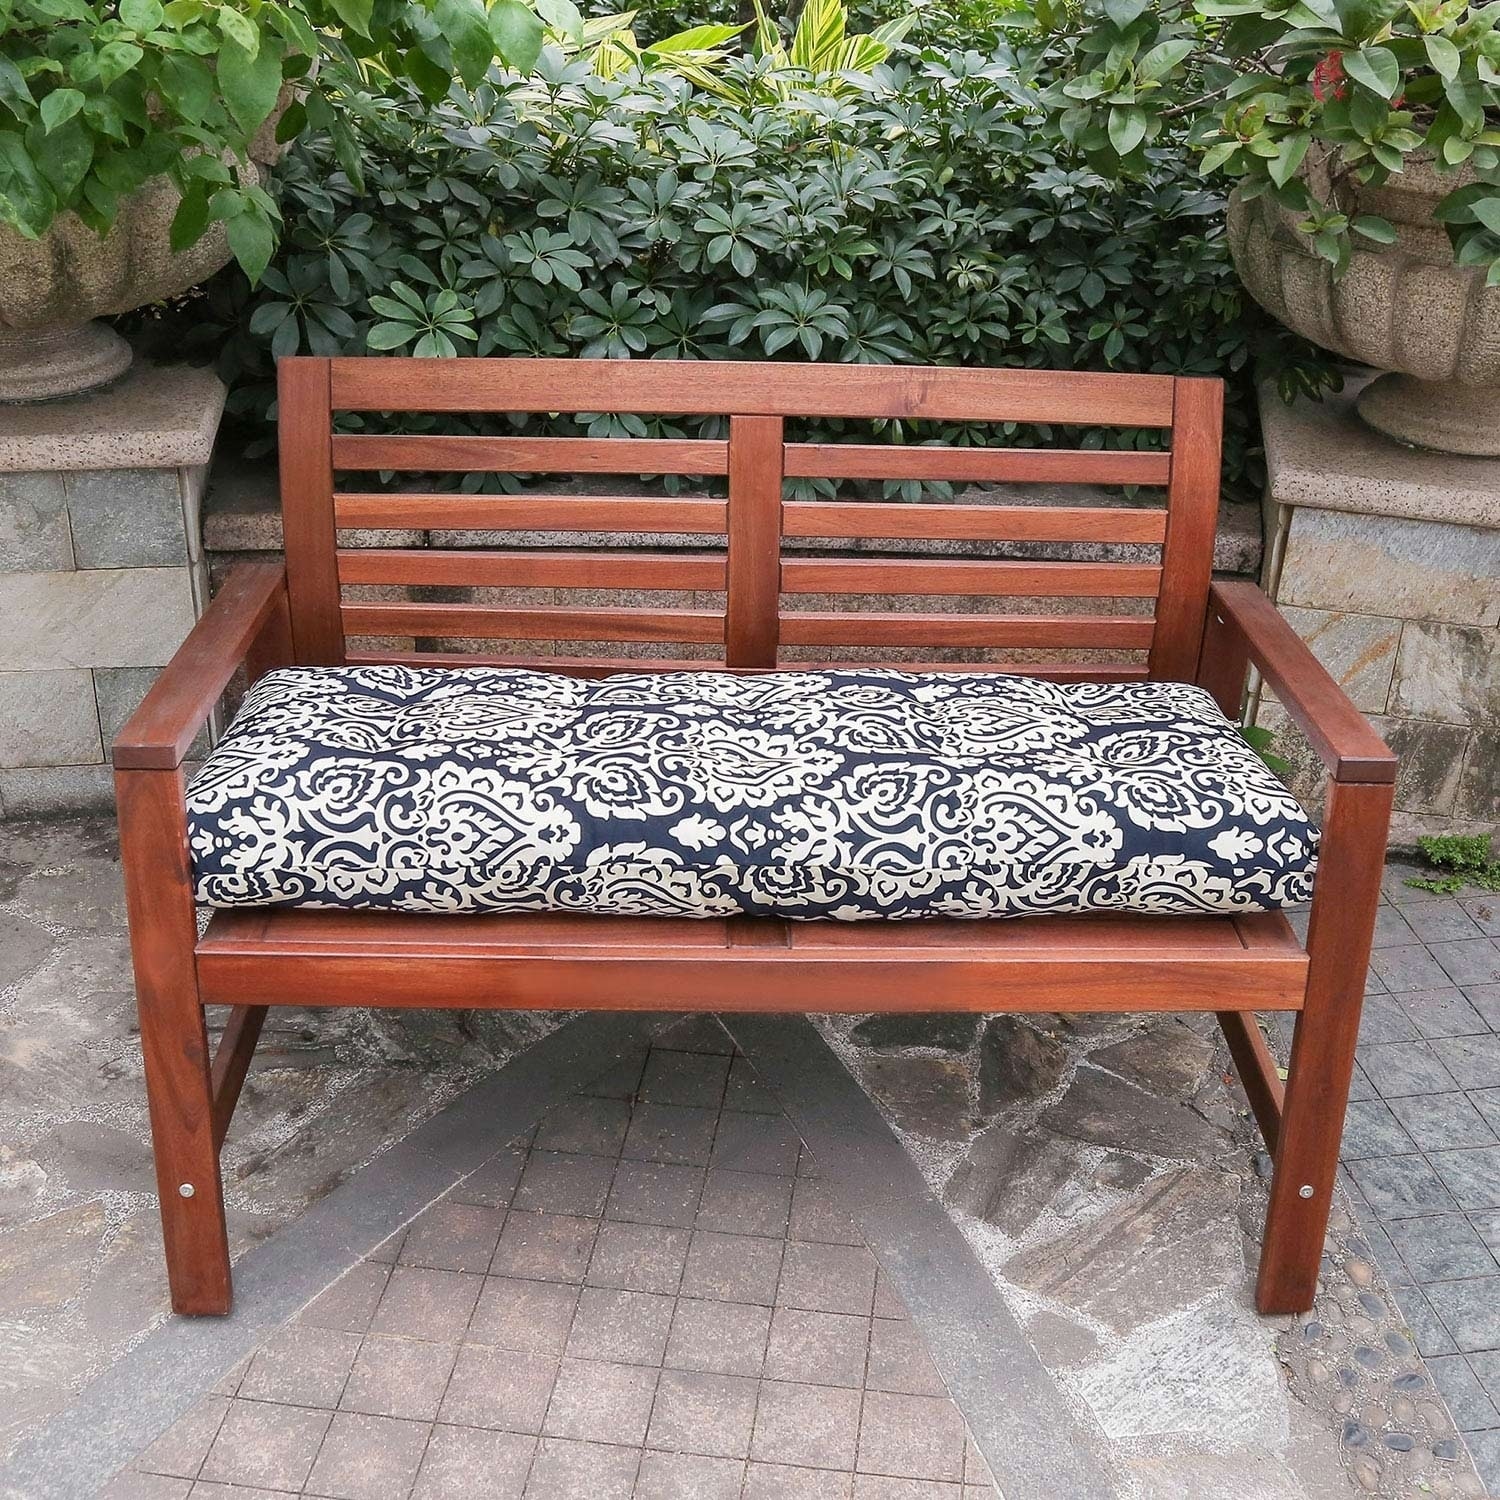 3 Seat Bench Cushions Outdoor - davidselfdesign